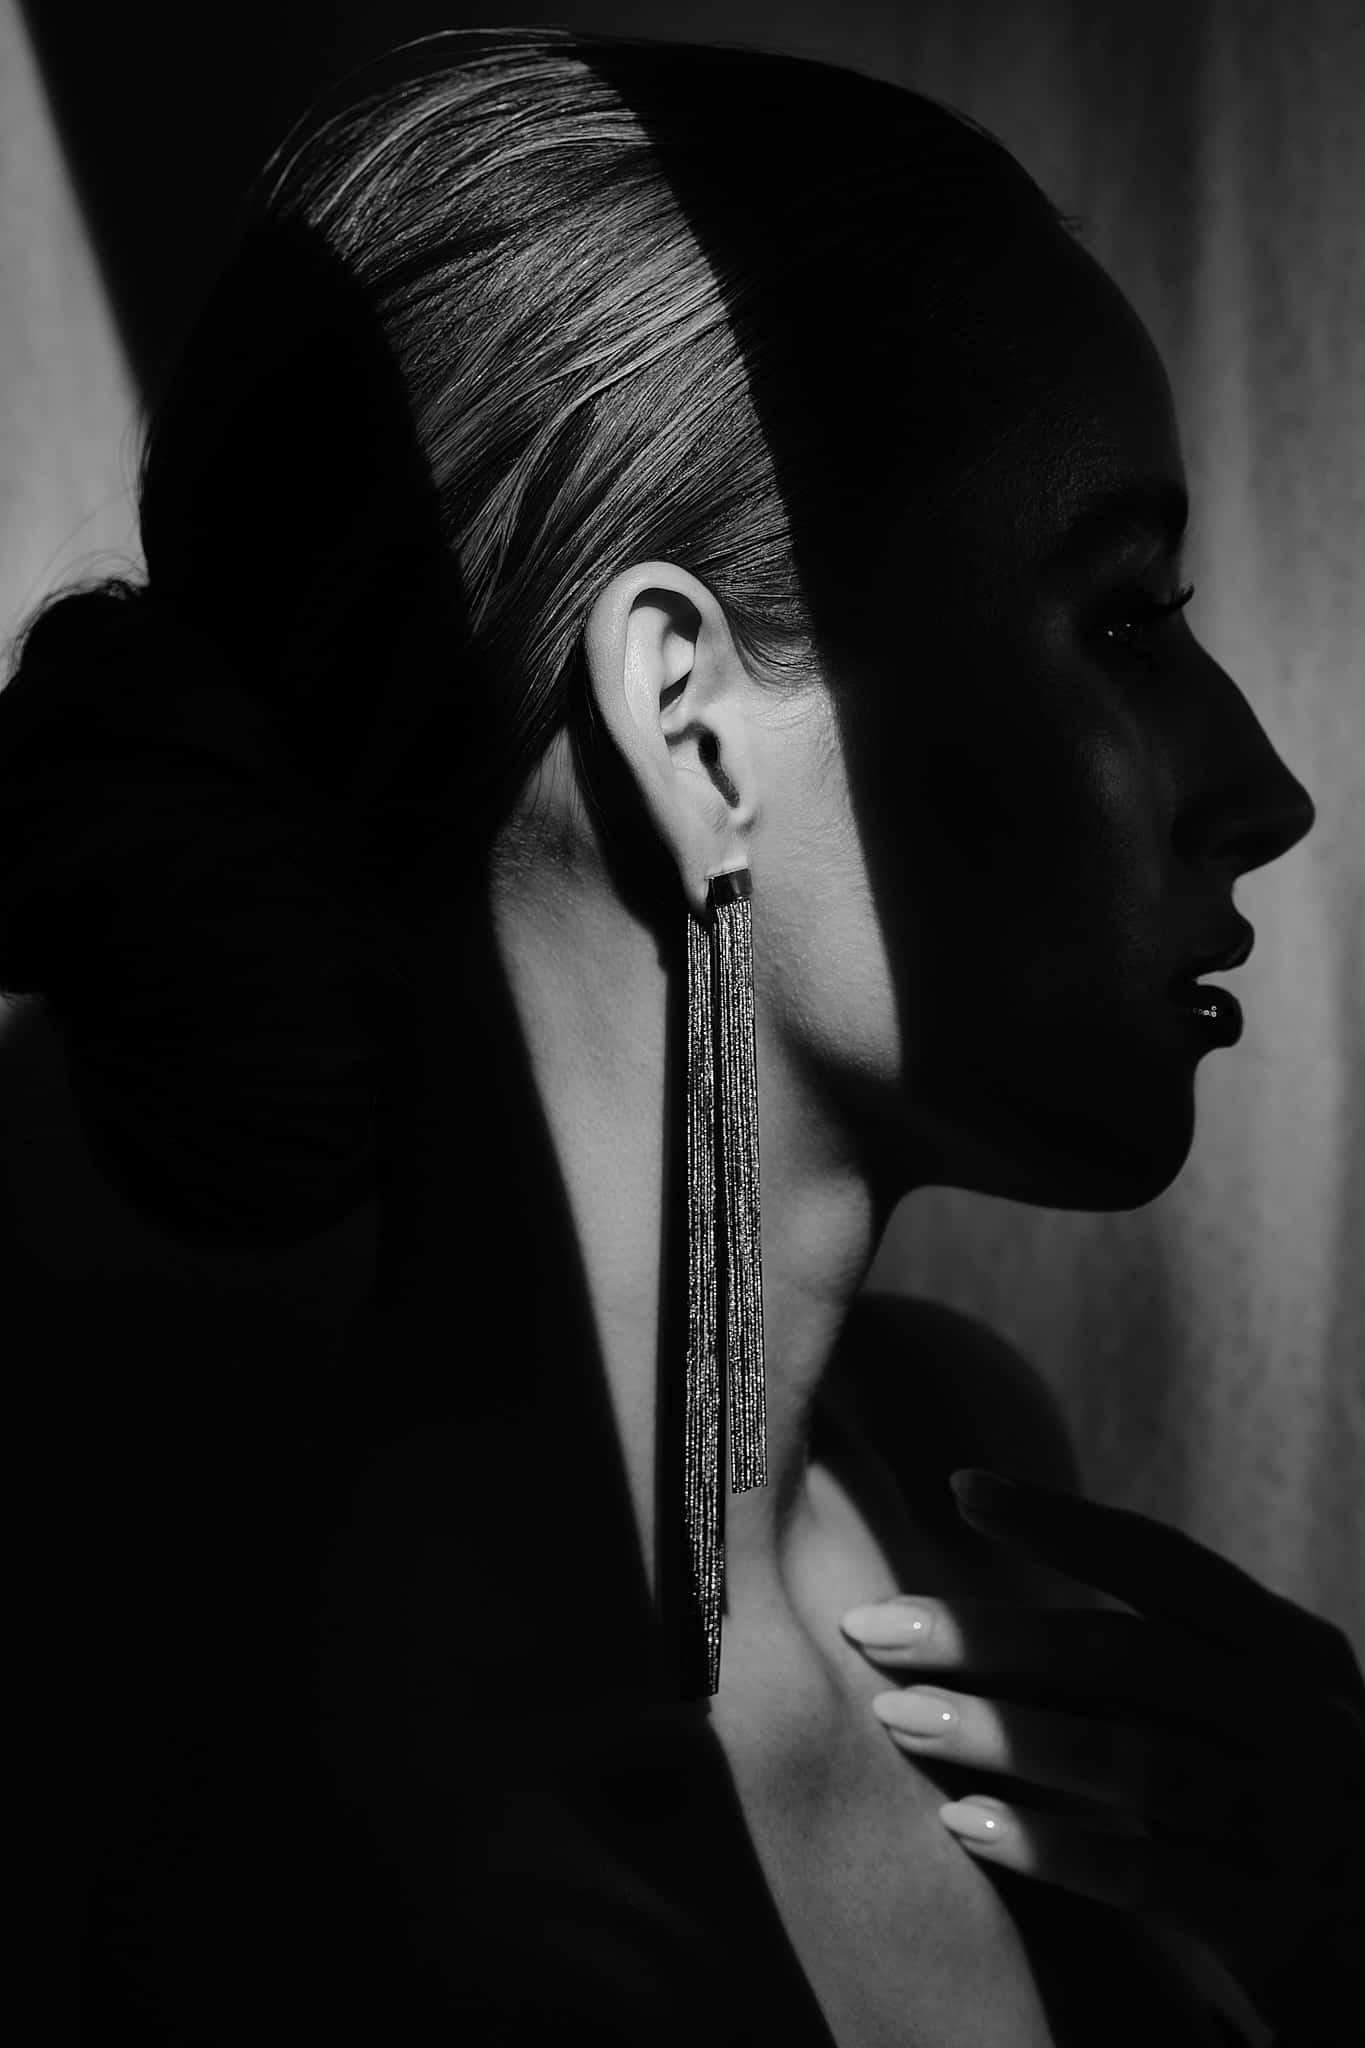 Photographer & Retouch: Tobias Bugala<br />
Model: Lea<br />
Styling: Gergana Reinhold<br />
Hair & Makeup Artist: Melissa Lutz